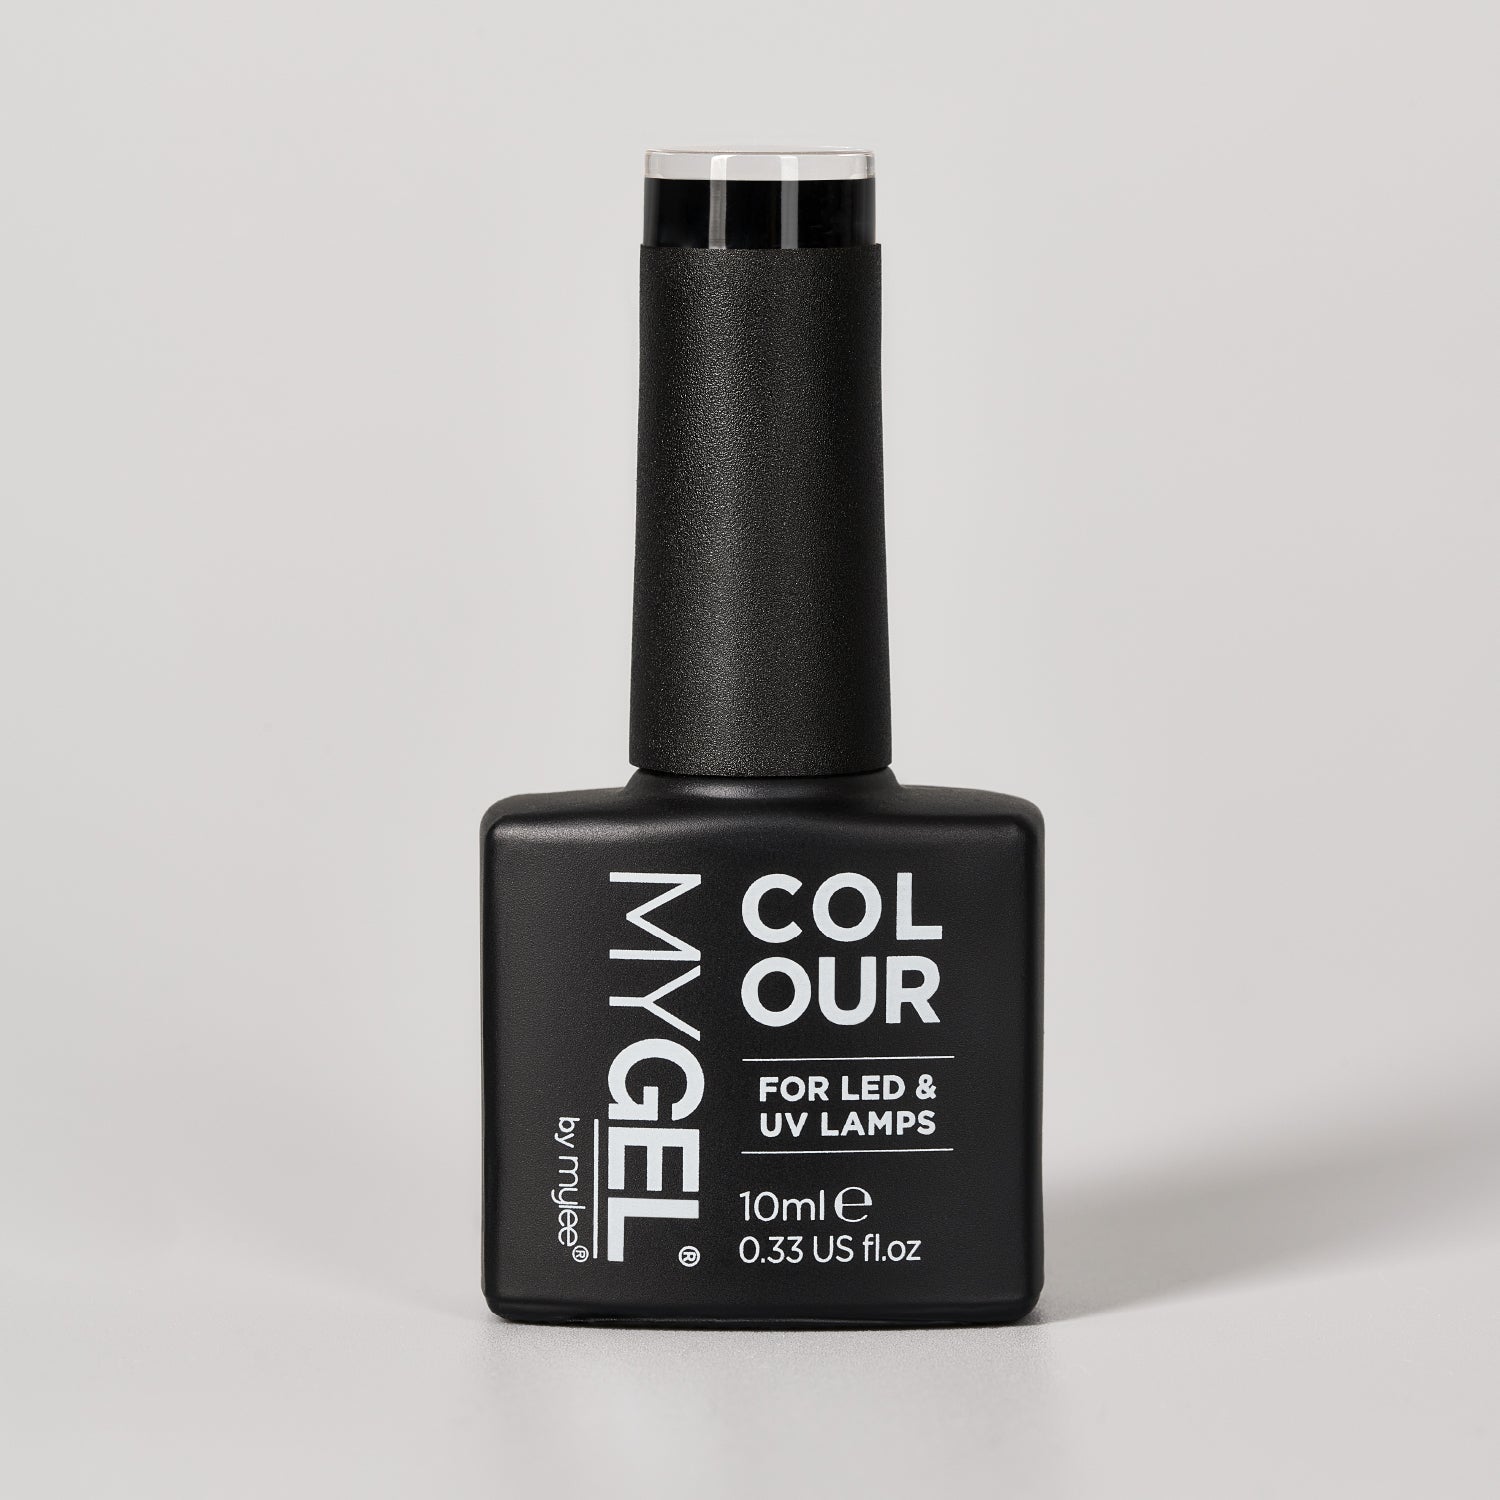 Mylee Stalker LED/UV Black Gel Nail Polish 10ml – Long Lasting At Home Manicure/Pedicure, High Gloss And Chip Free Wear Nail Varnish